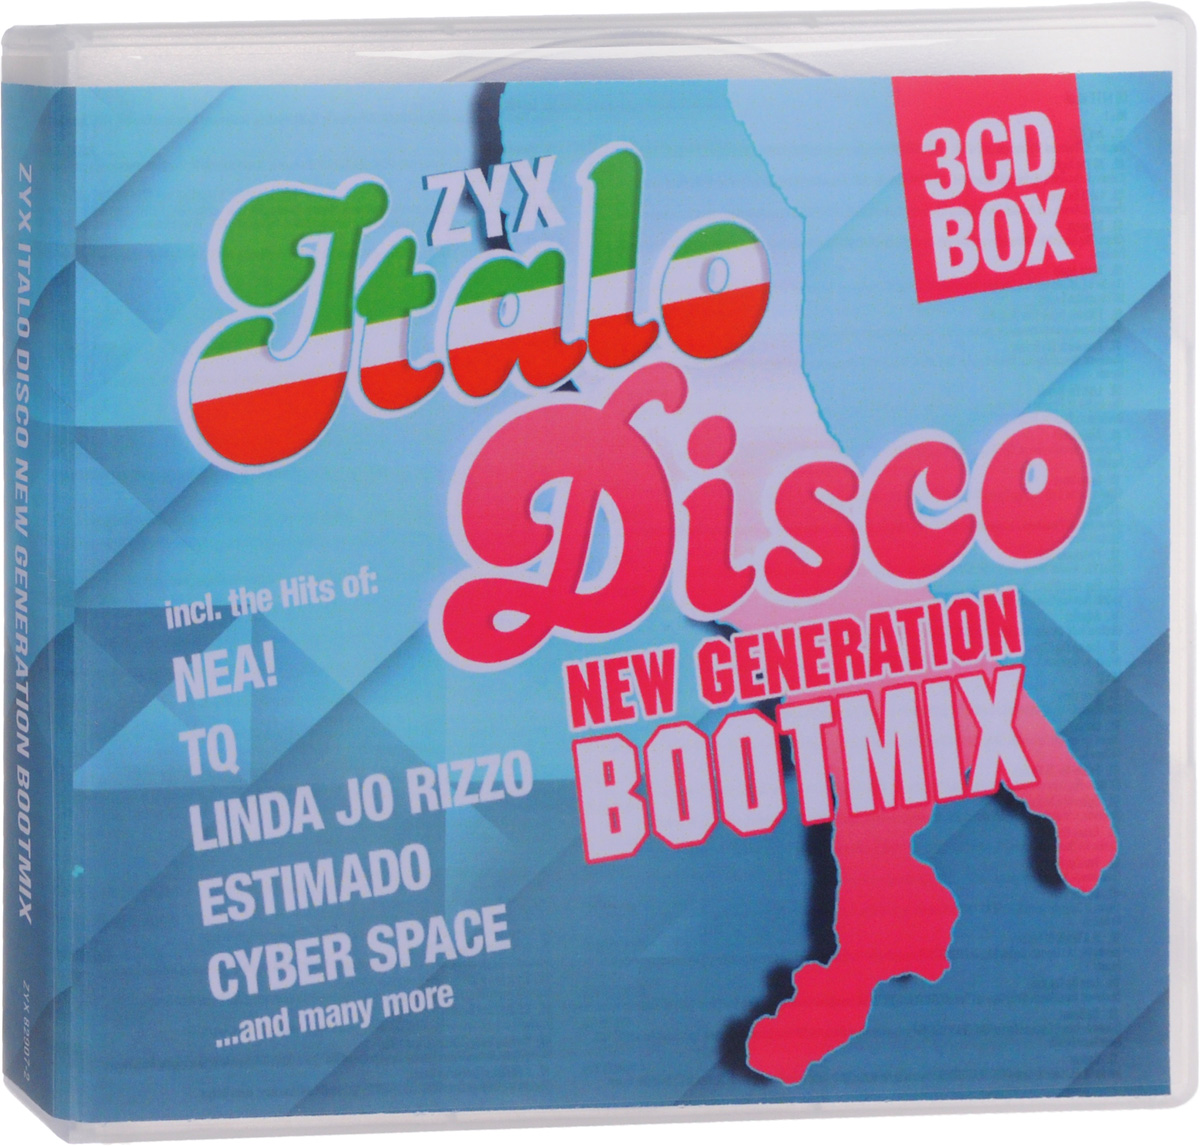 Zyx italo disco new generation 24